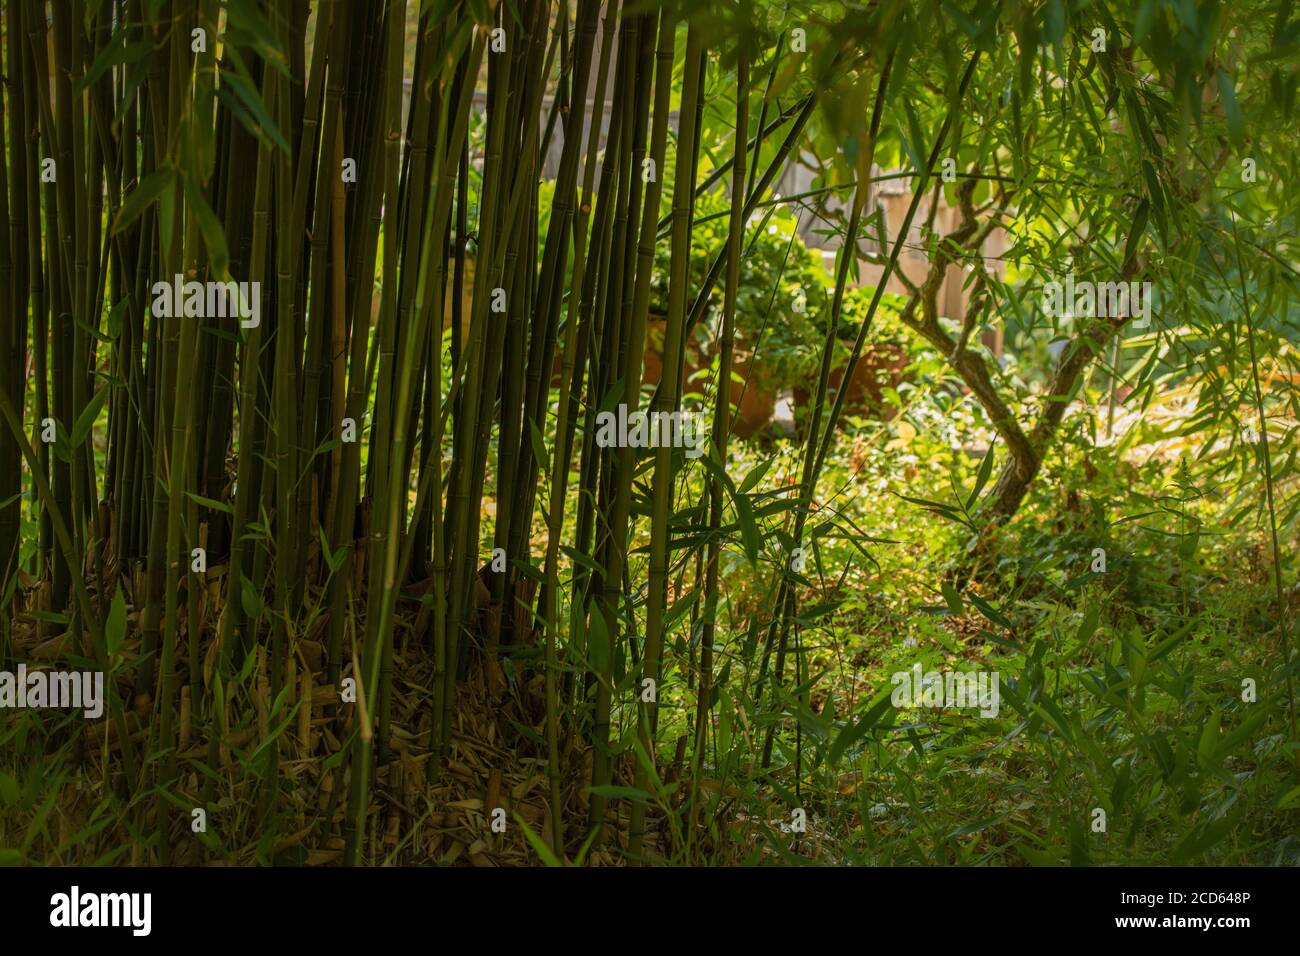 Phyllostachys Purpurata (english bamboo)forming a natural backlit screen in a sunny garden setting Stock Photo